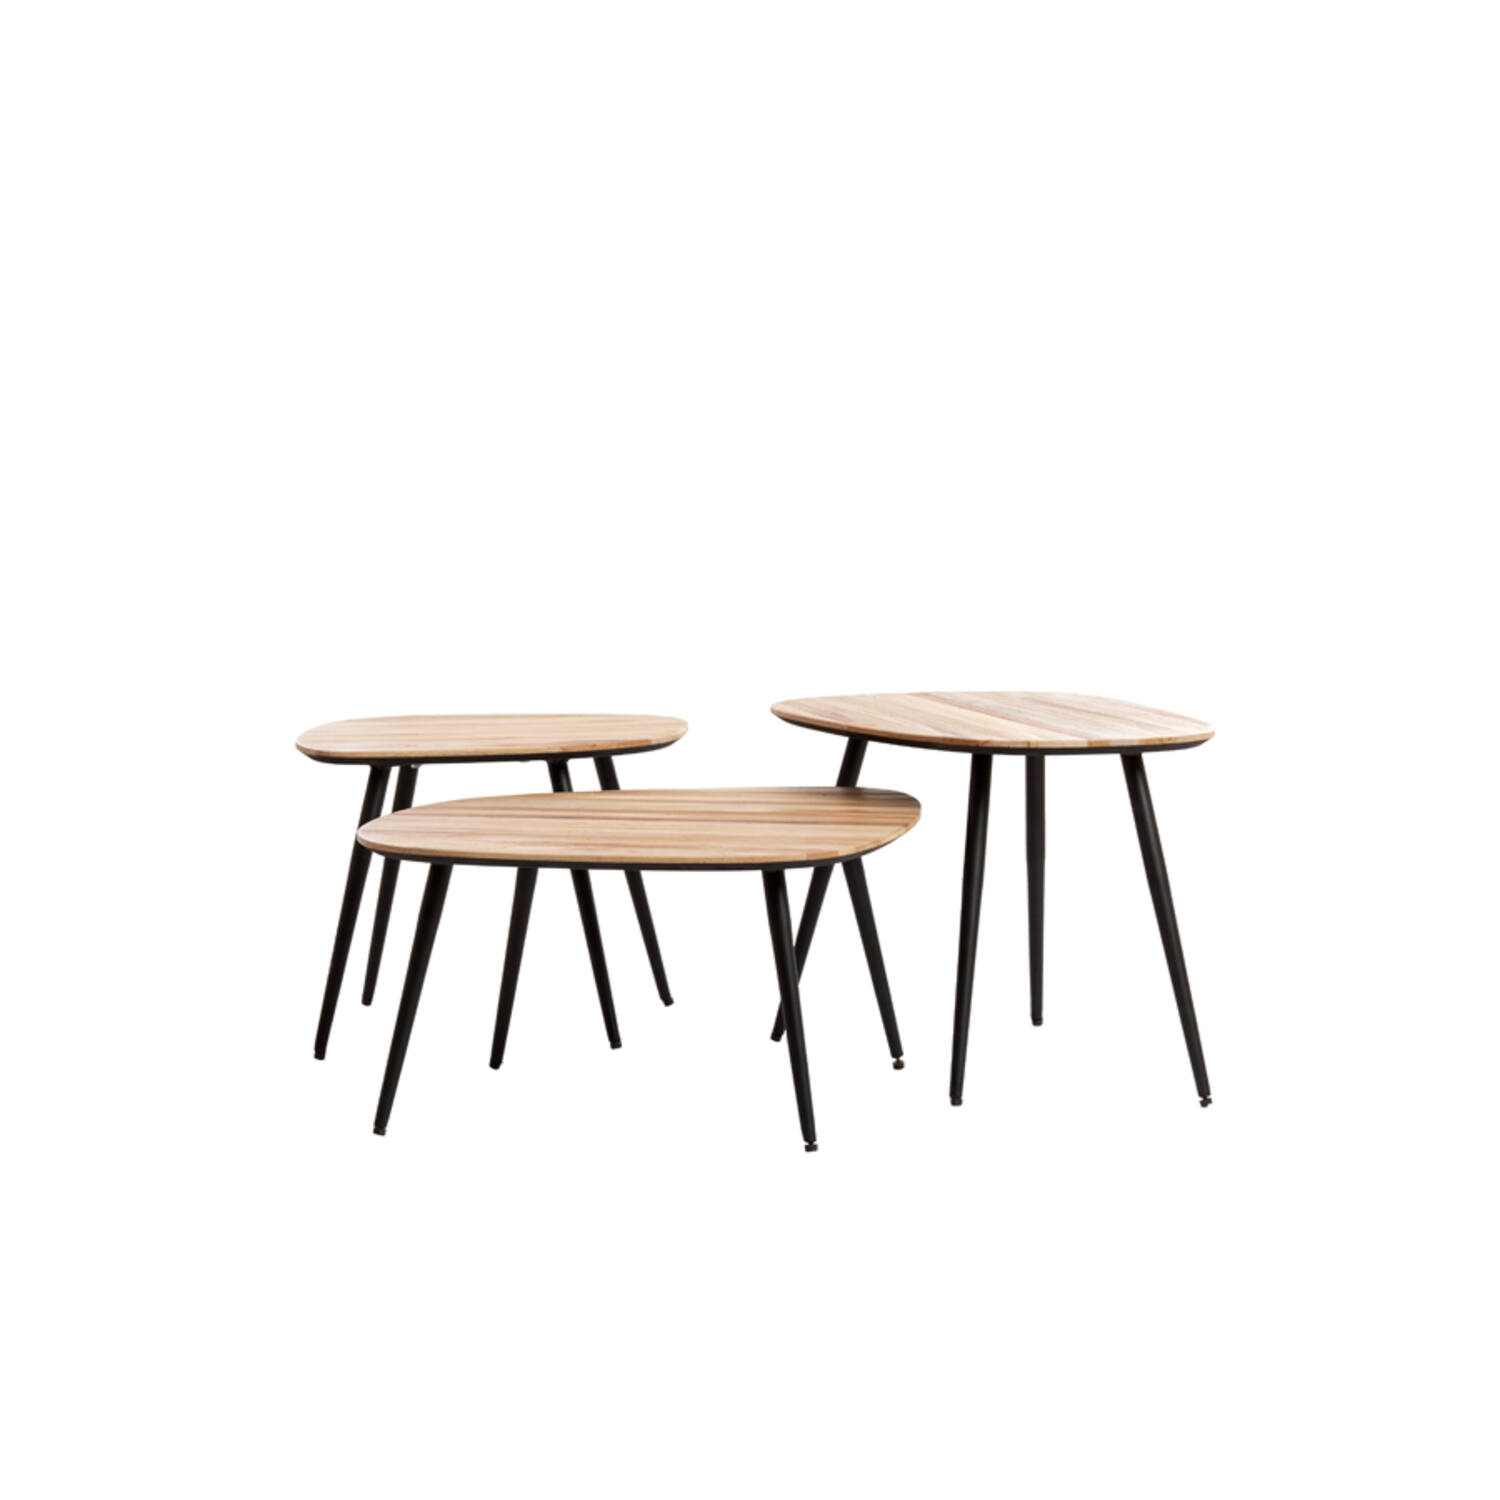 Coffee table S/3 max 62x42x38 cm VIEJO wood natural